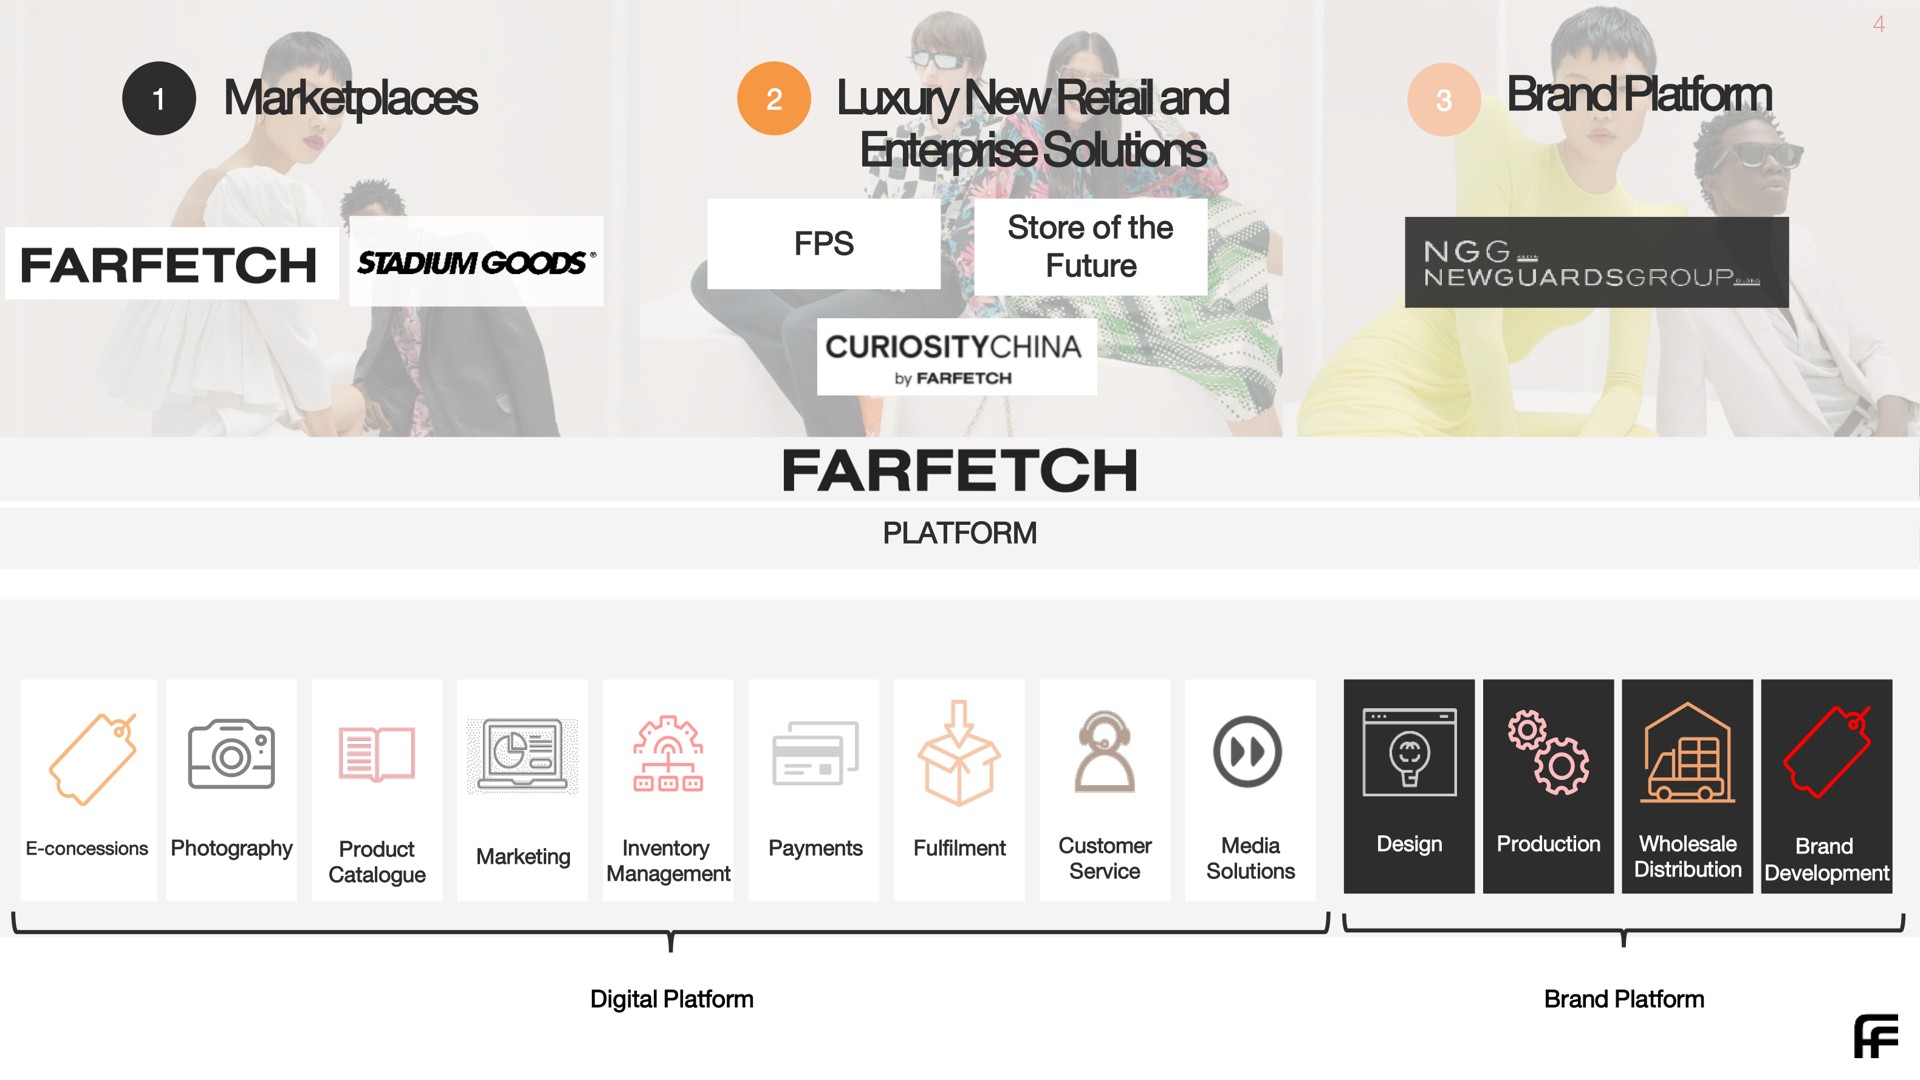 luxury new retail and enterprise solutions brand platform | Farfetch